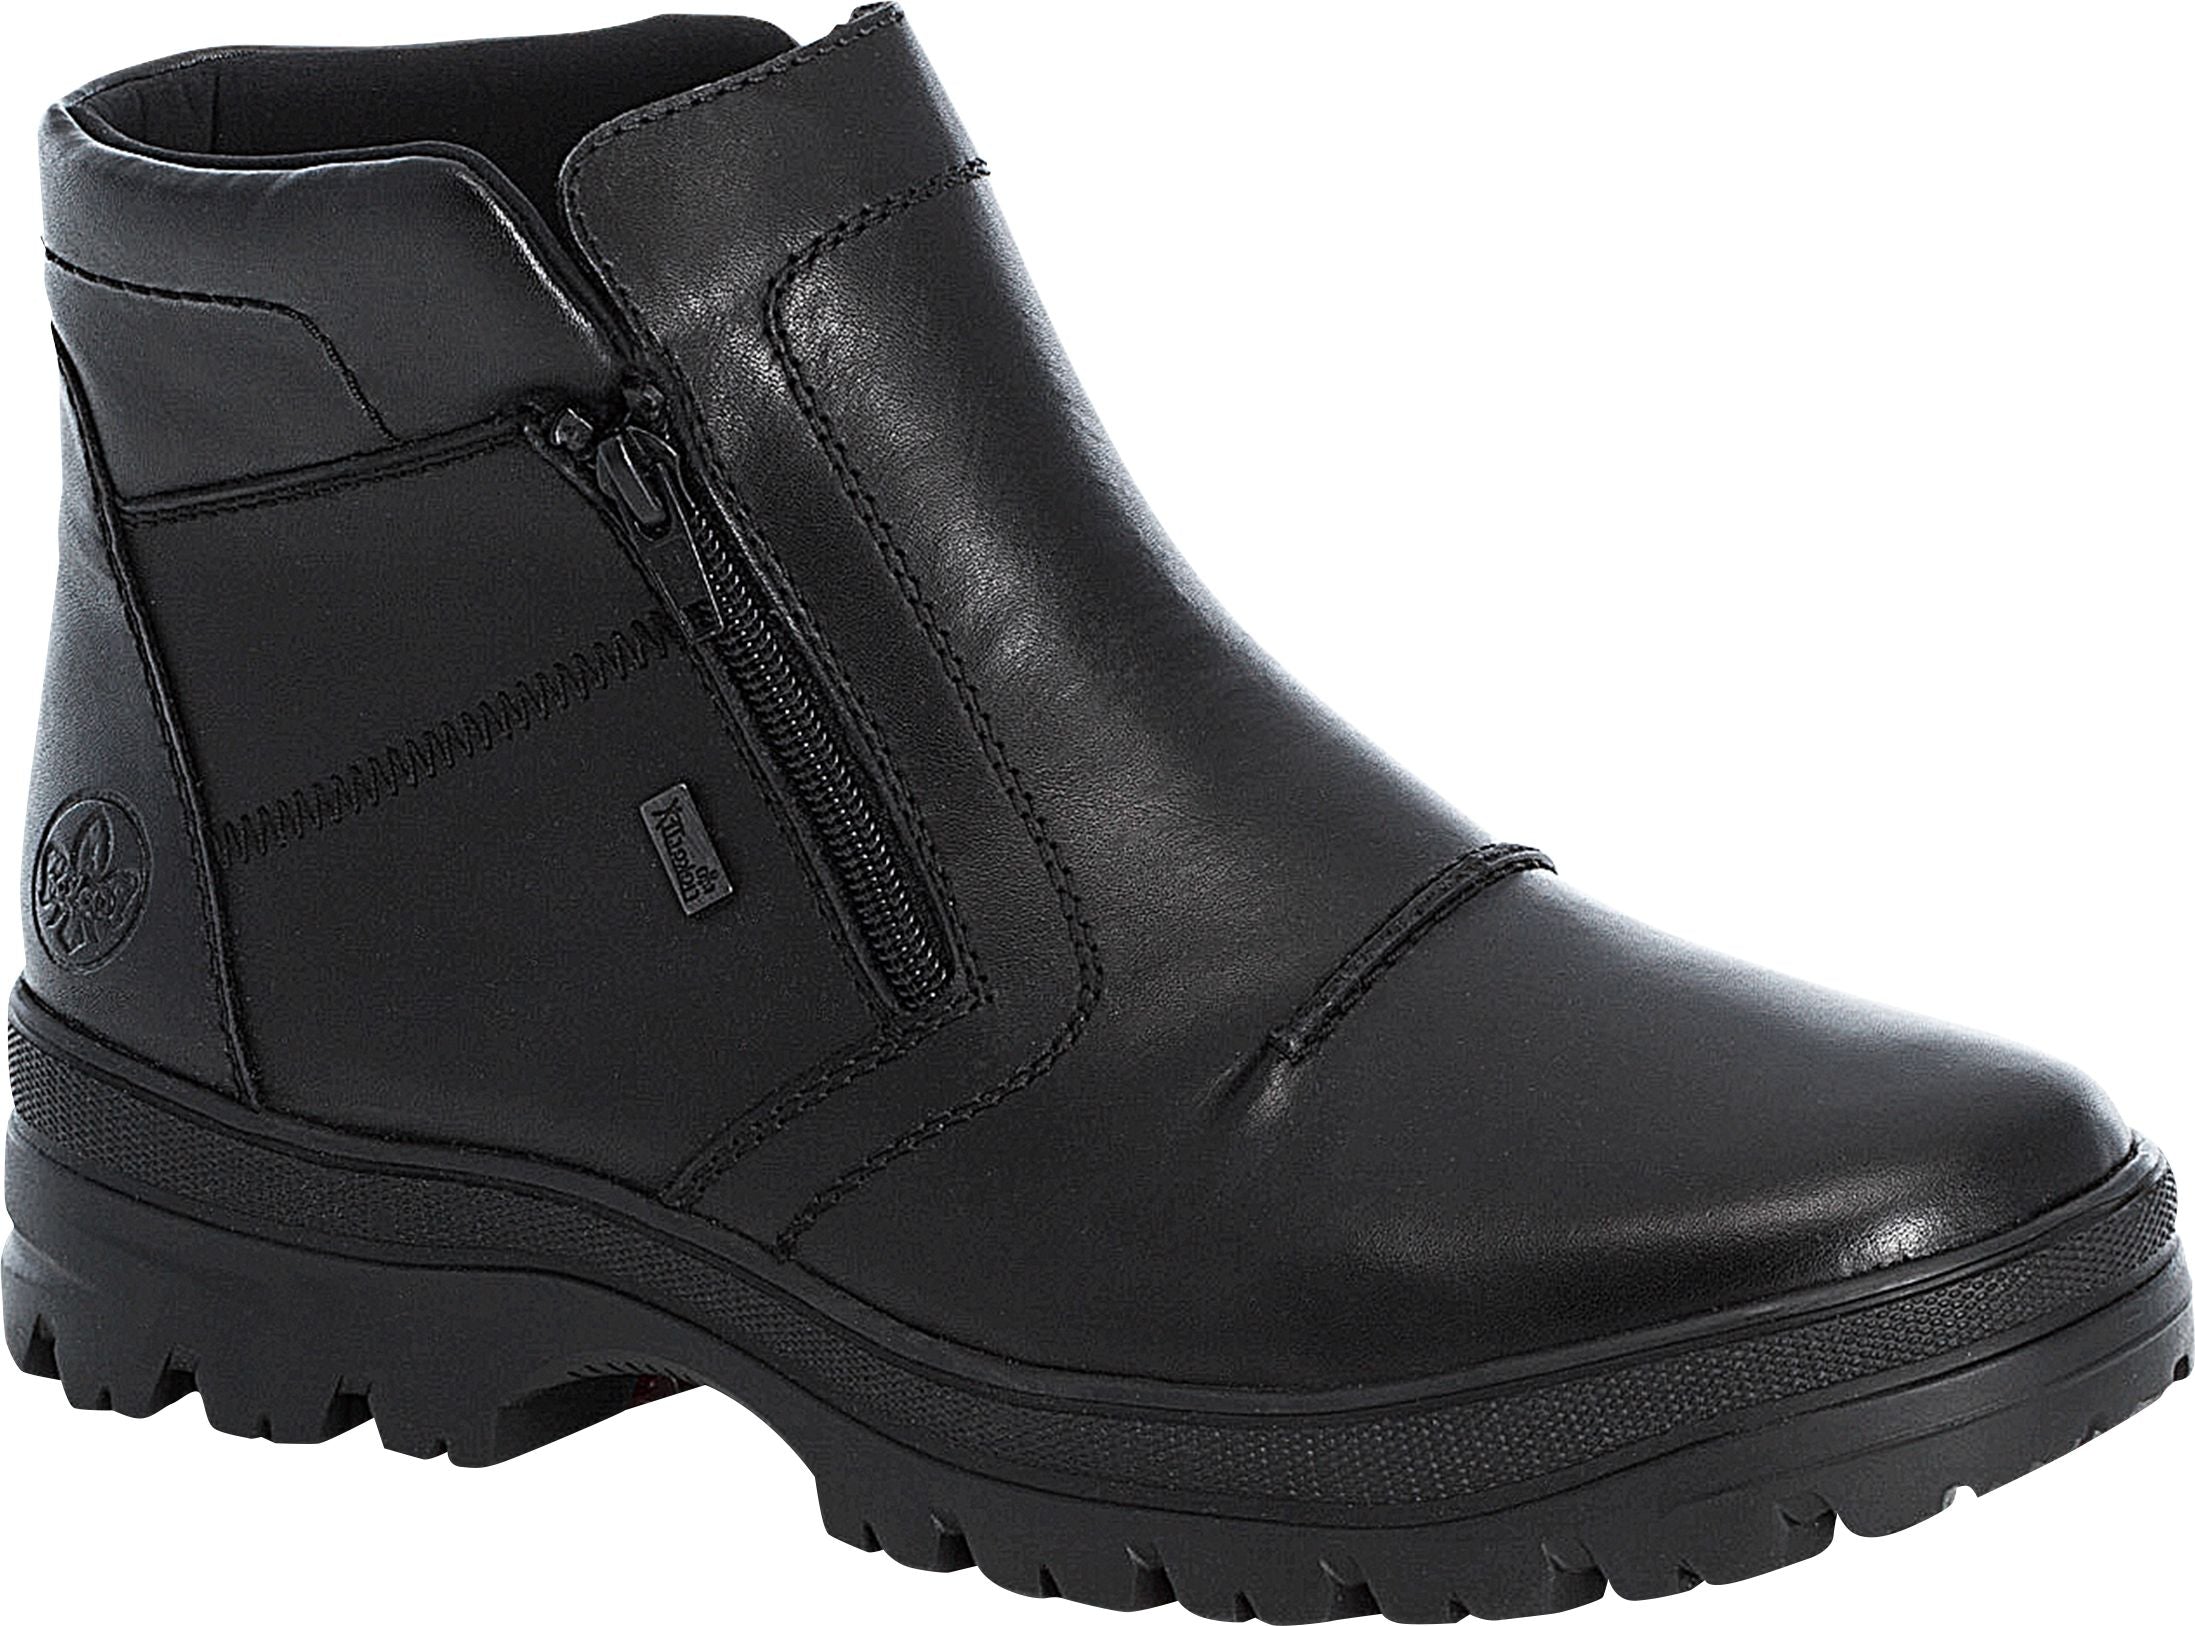 Black Side Zip Warm Lined Boot